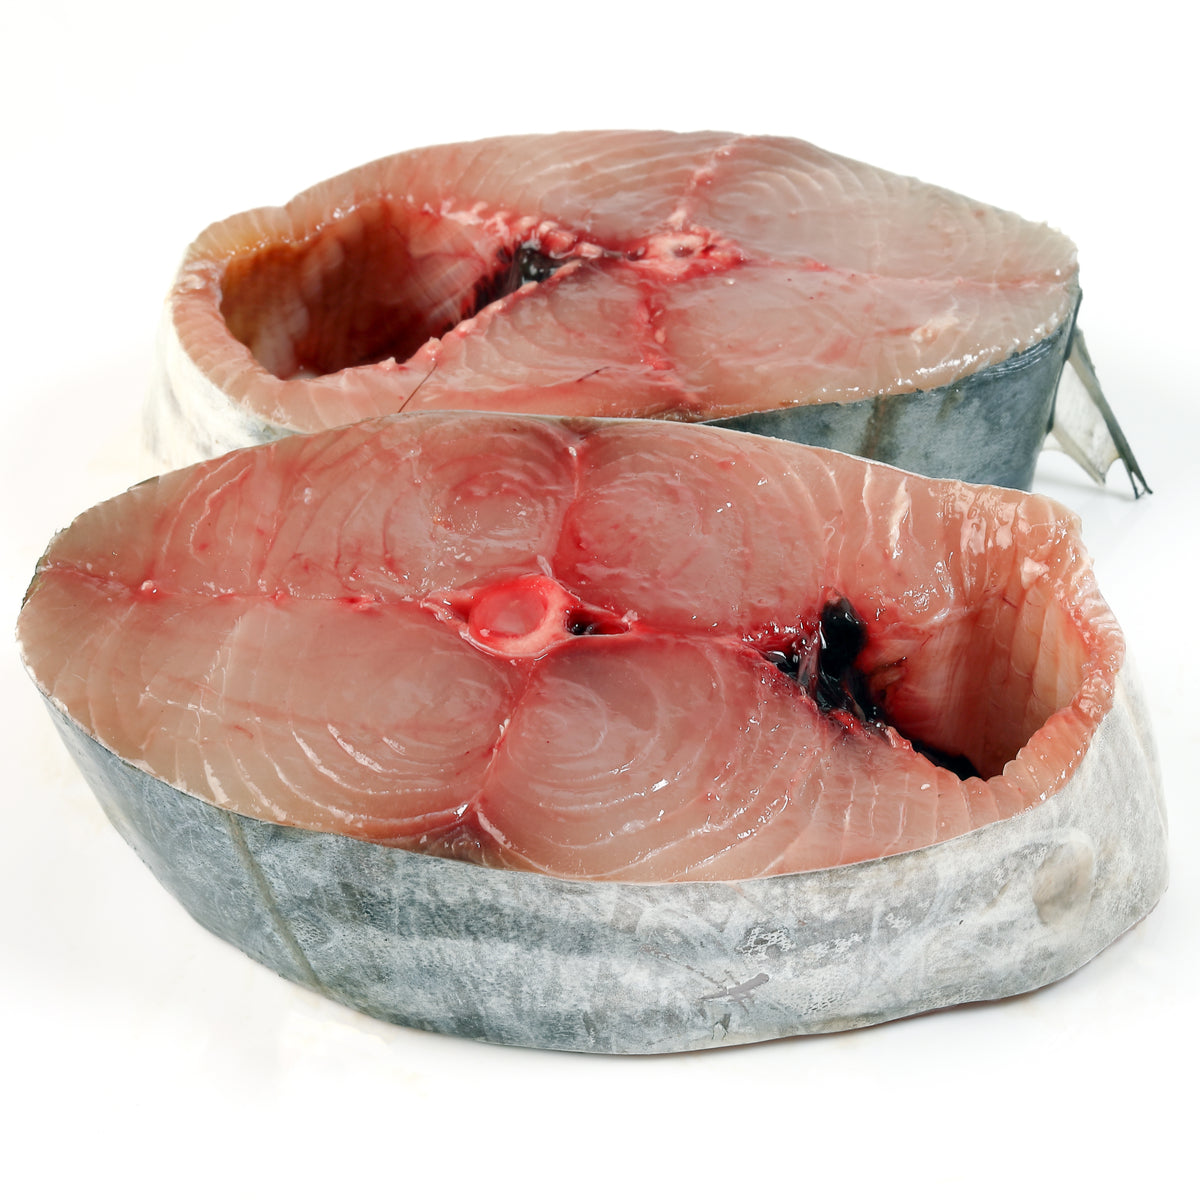 KING FISH STEAK FROZEN (1kg) - Prime Cuts Butchery, Deli & Bistro